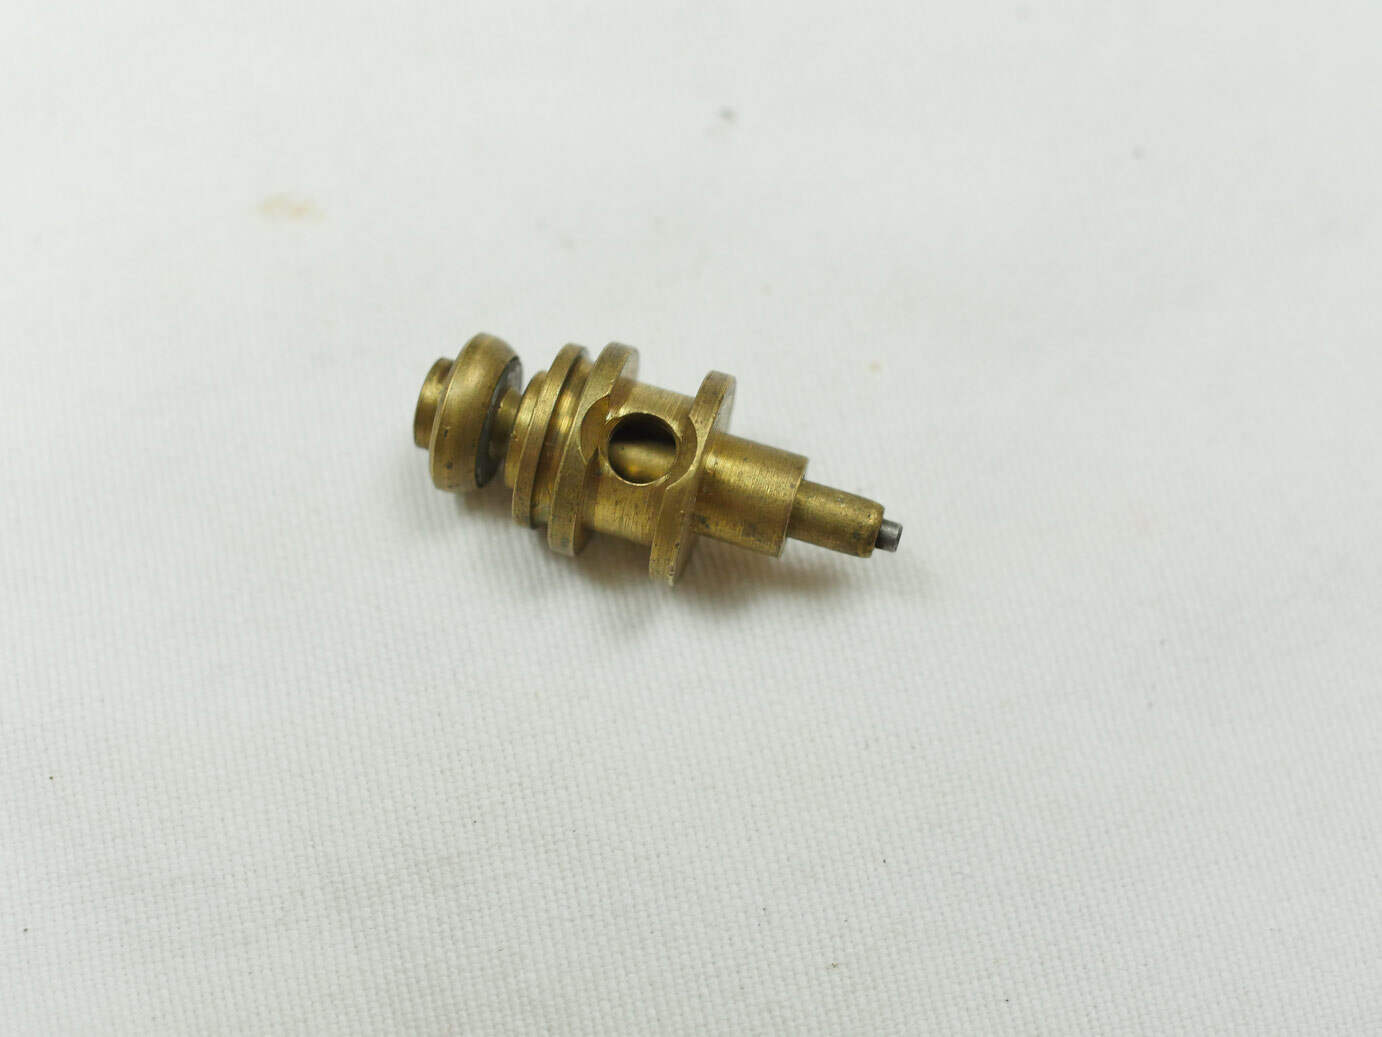 Stock cocker valve, earlier valve, small transfer hole. Good shape valve